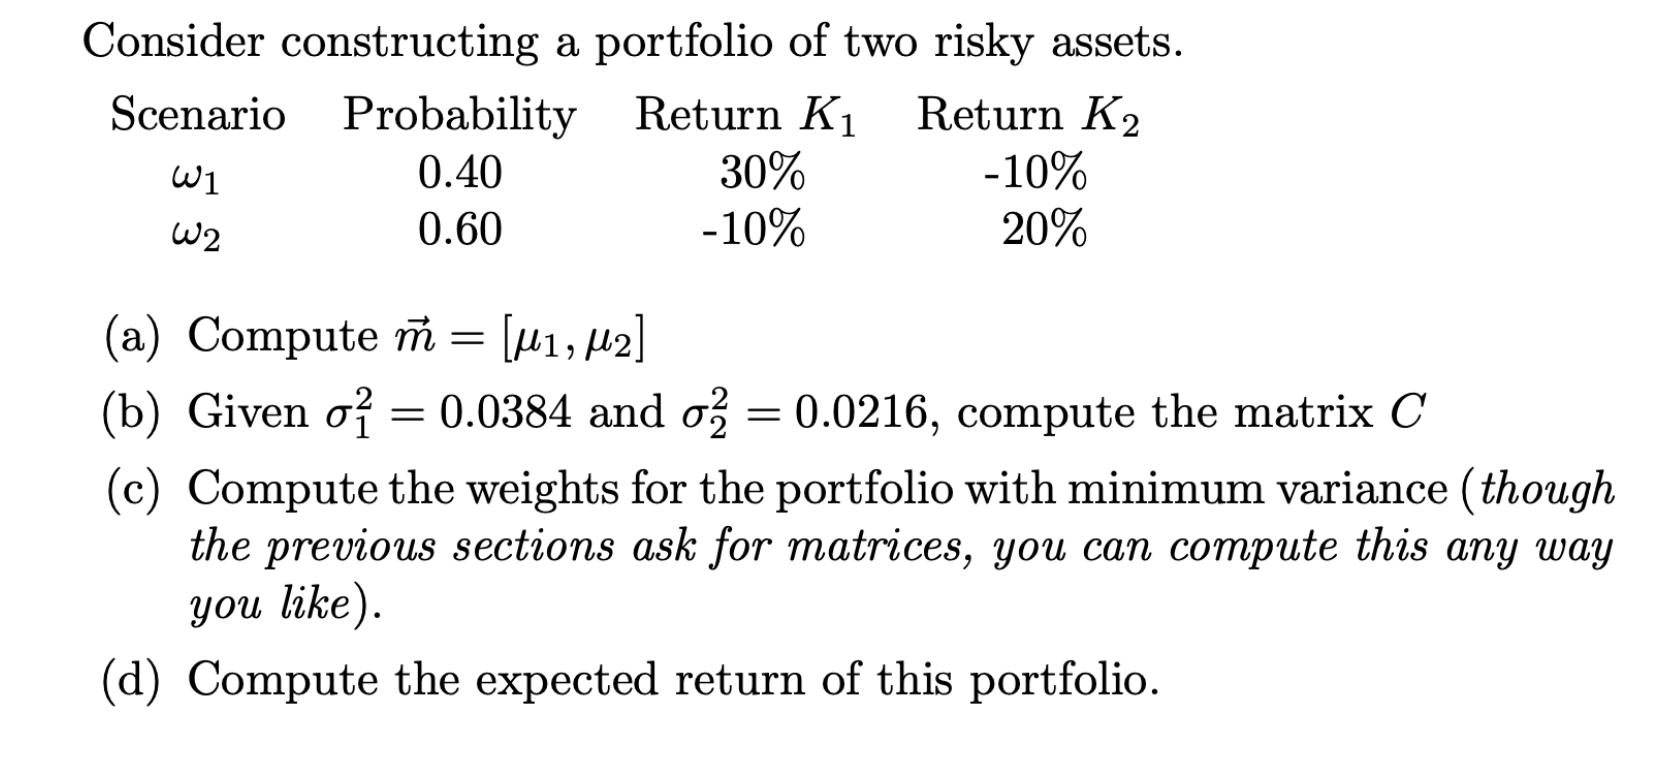 Consider constructing a portfolio of two risky assets. Scenario Probability Return K Return K W1 0.40 W2 0.60